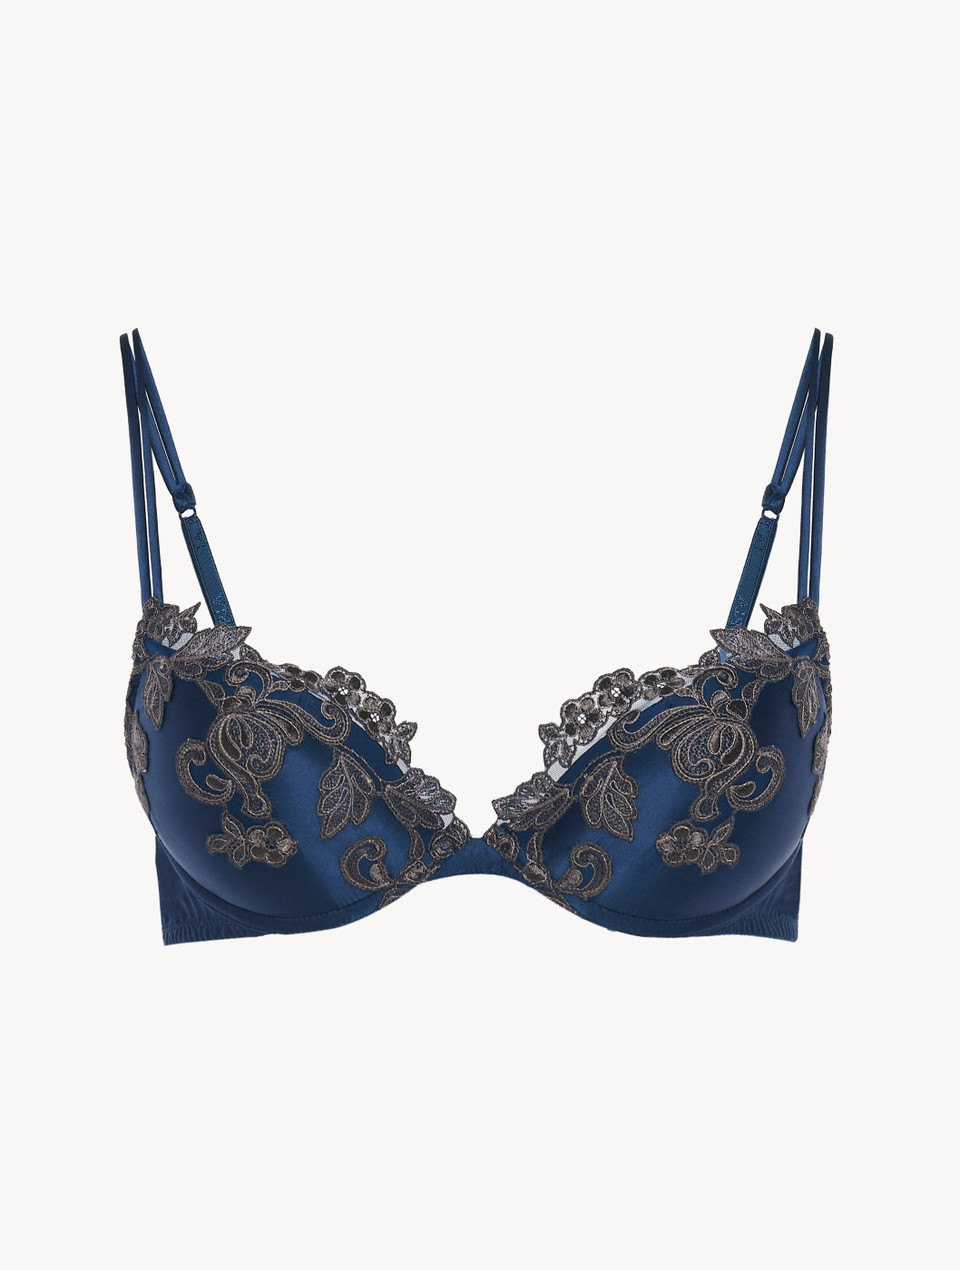 Luxury Silk Push-Up Bra in Blue with Frastaglio | La Perla